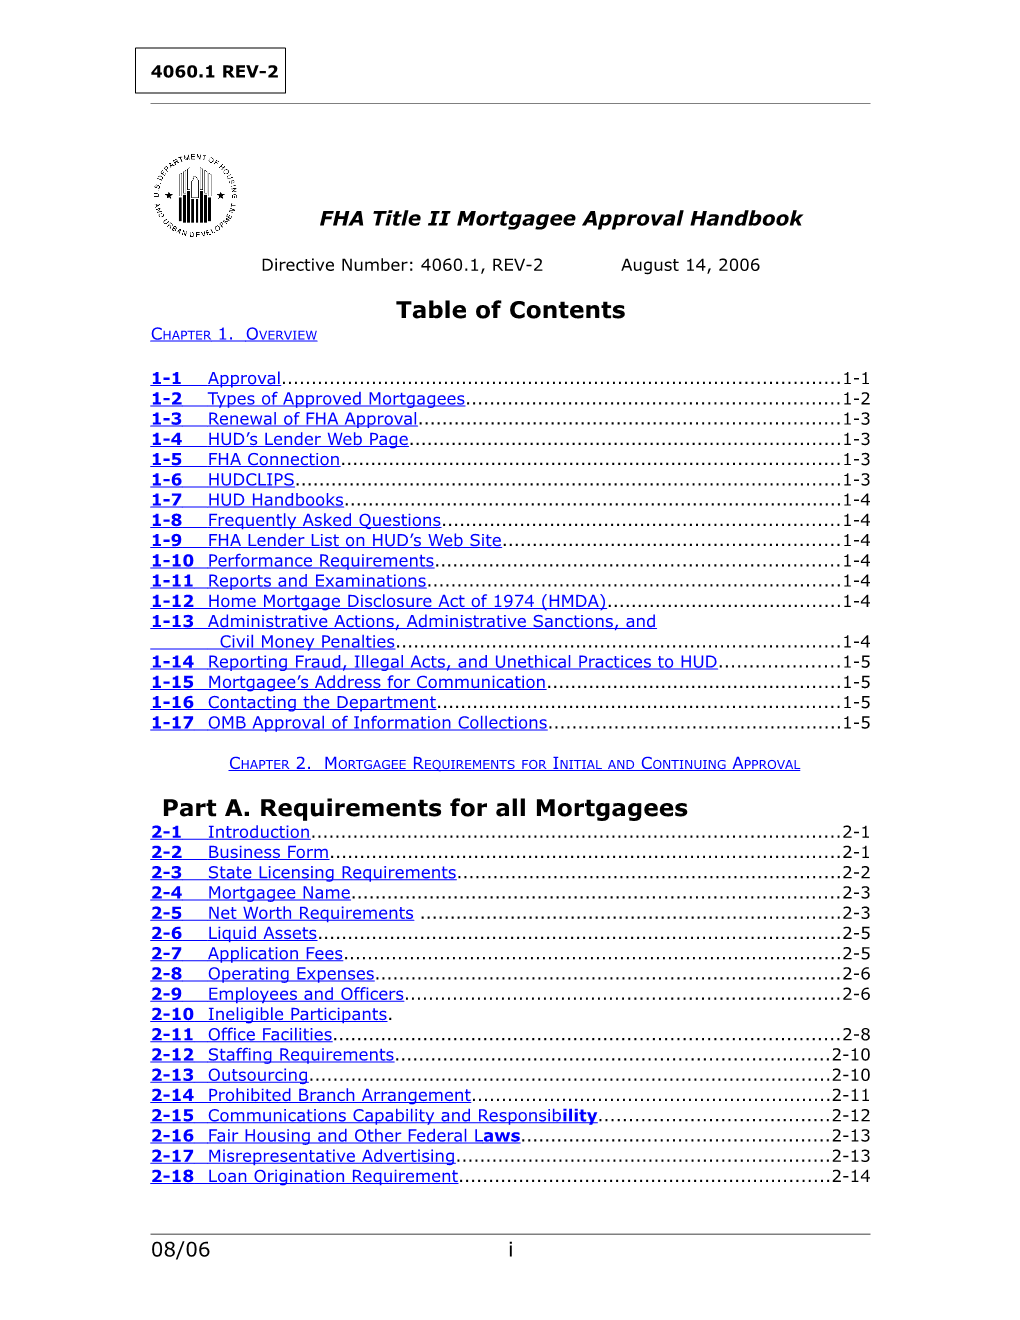 FHA Title II Mortgagee Approval Handbook